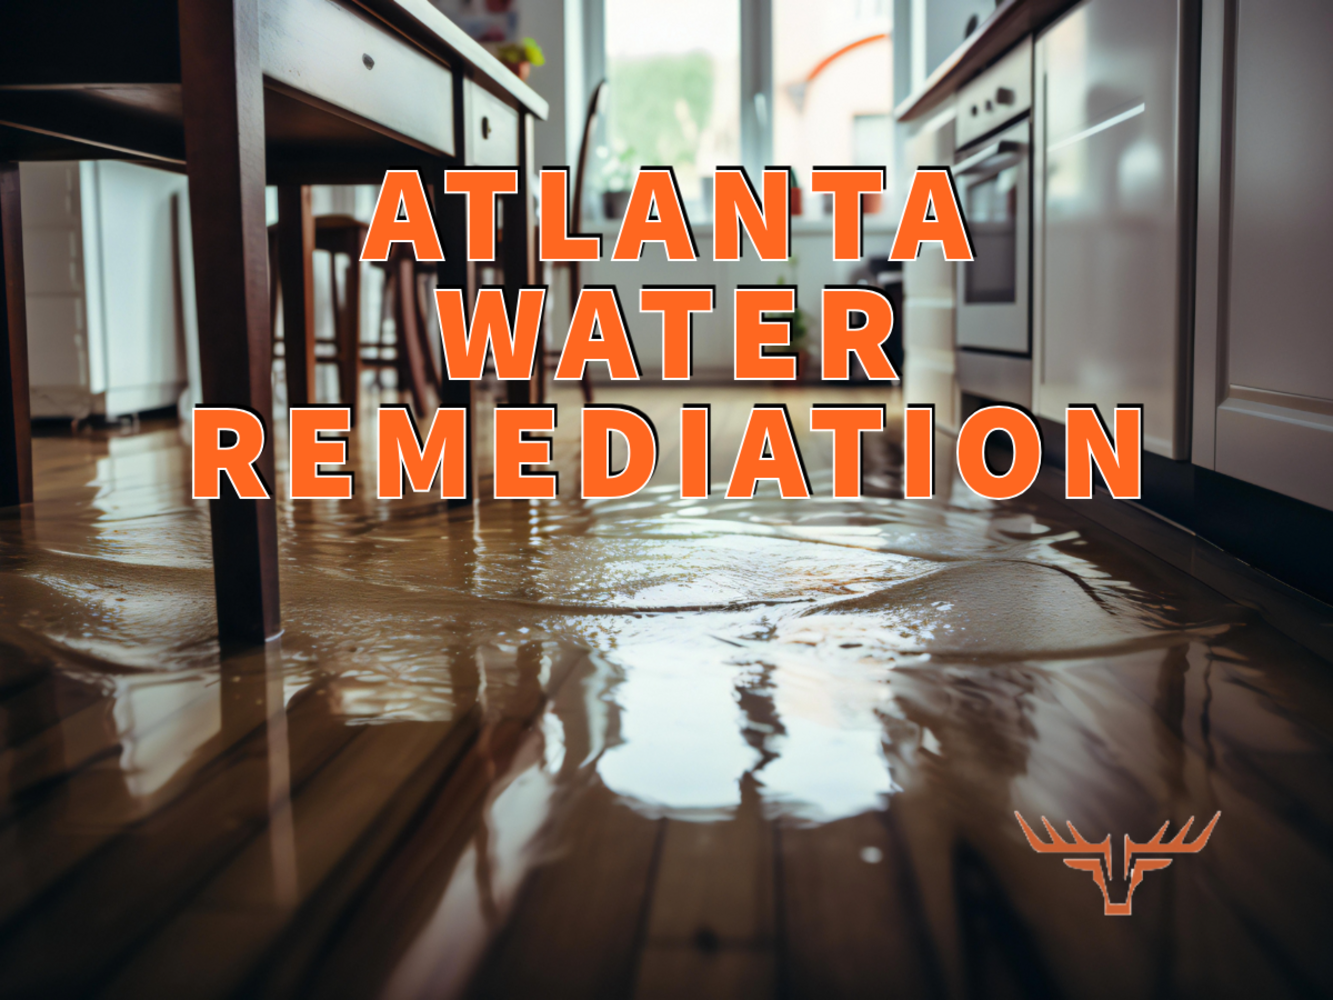 Atlanta water remediation written in orange over water seeping atop hardwood floor